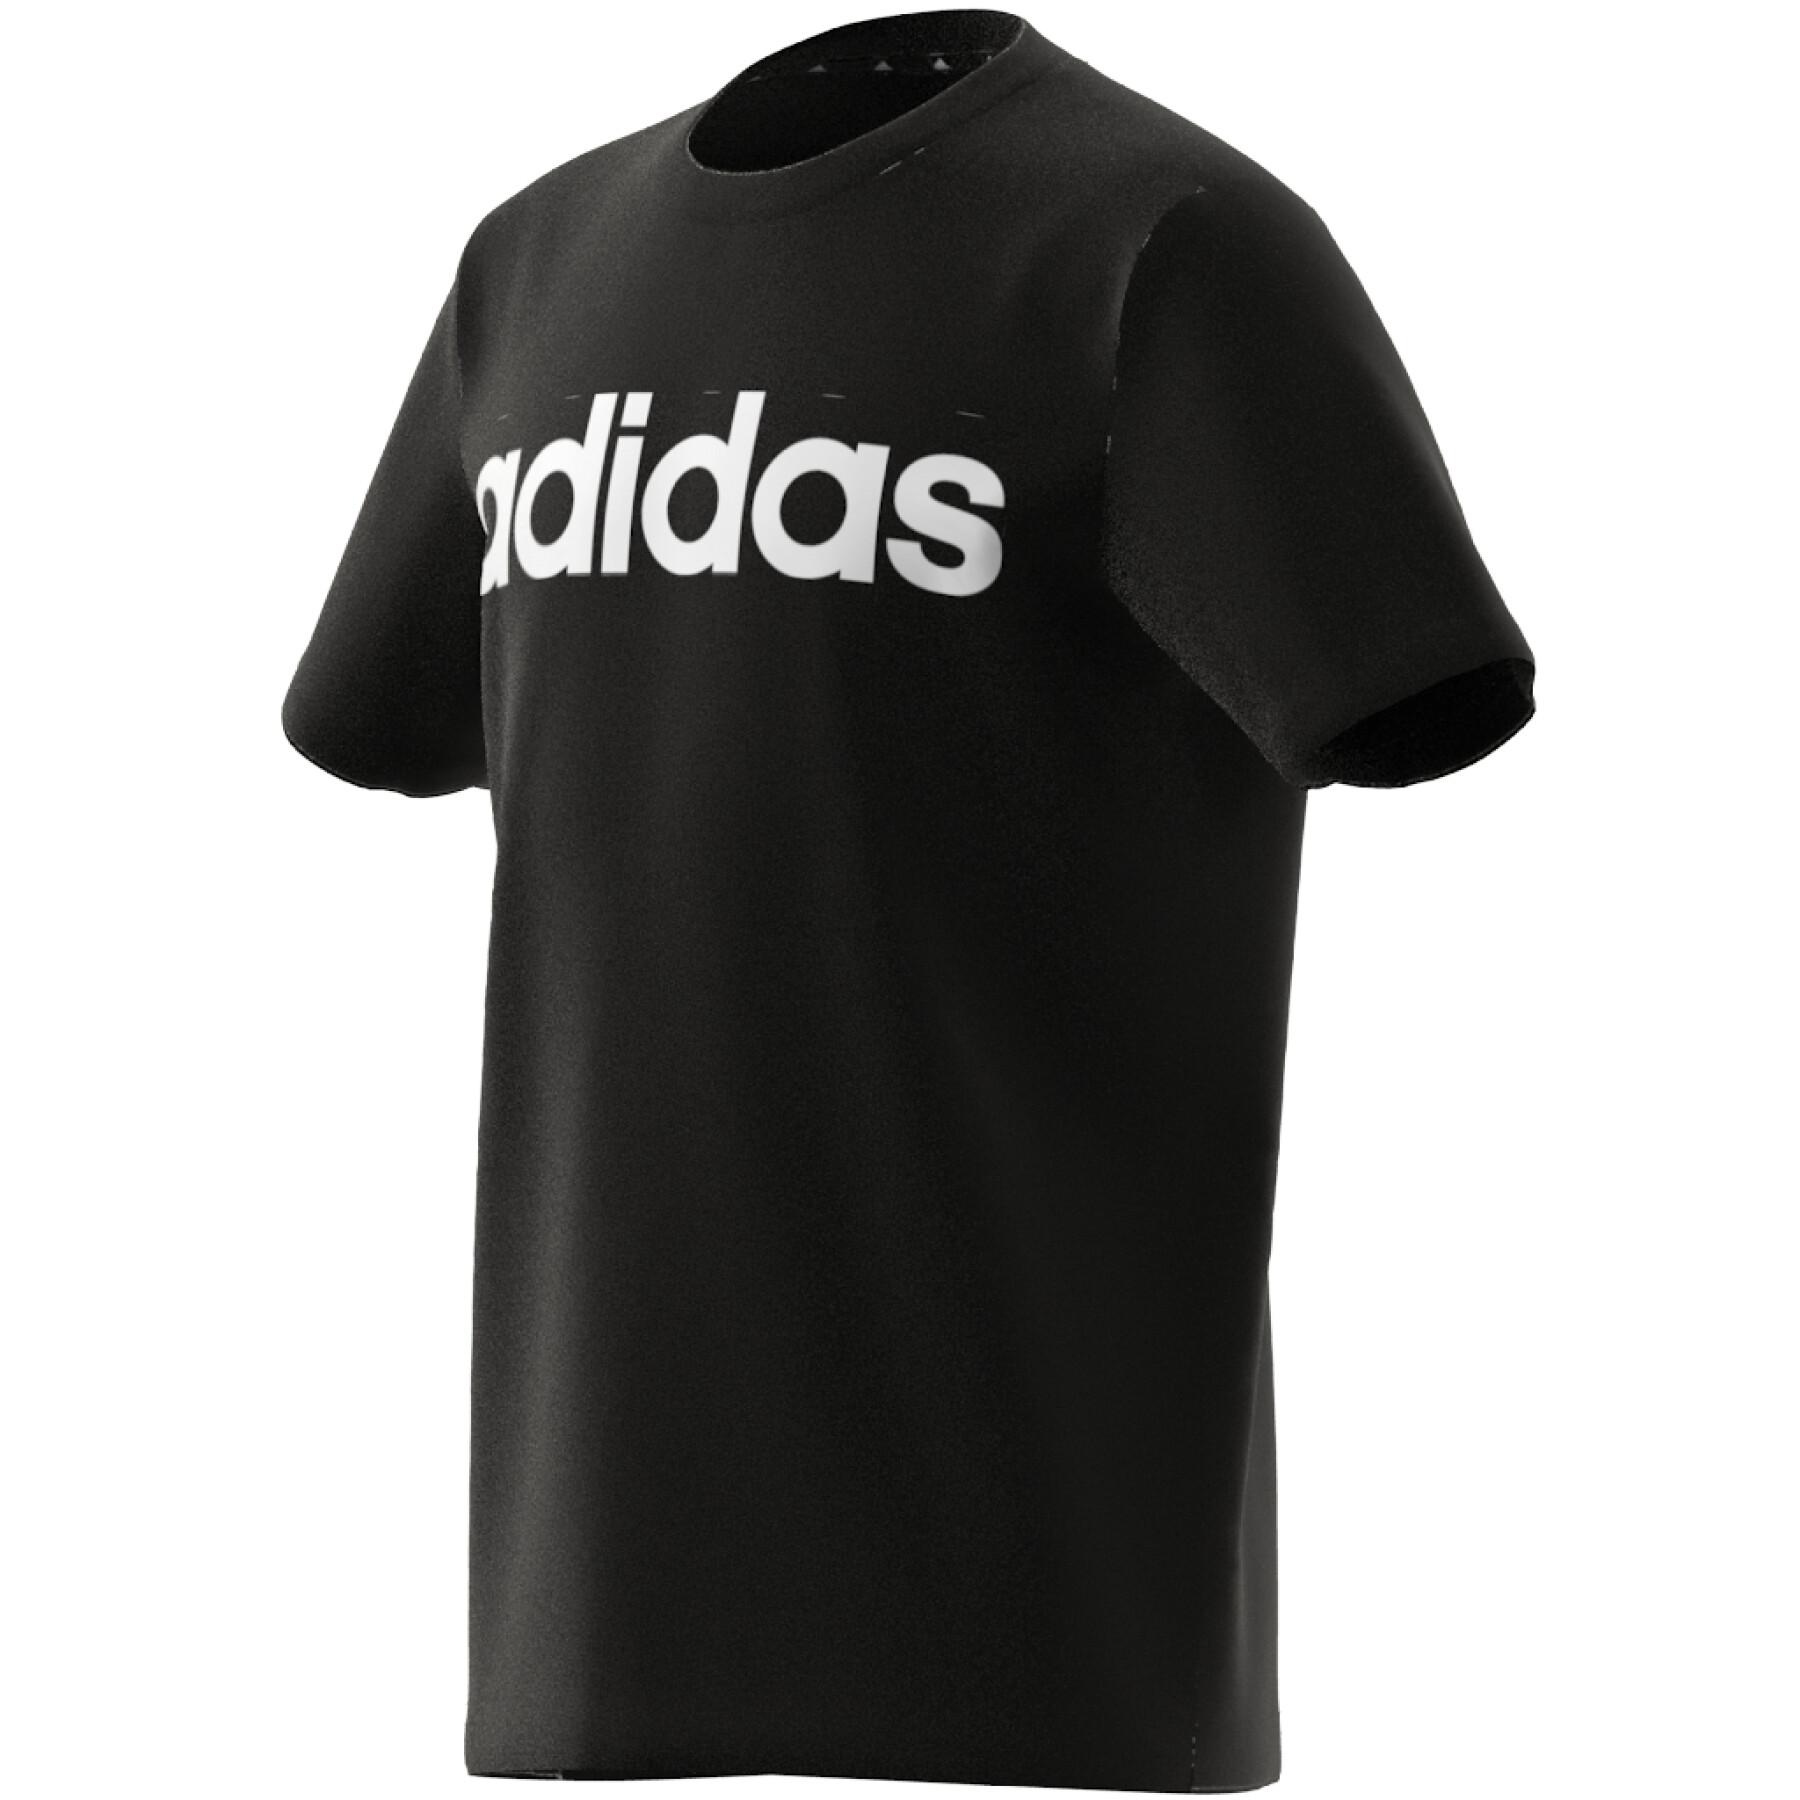 Katoenen kinder-T-shirt met logo adidas Essentials Linear